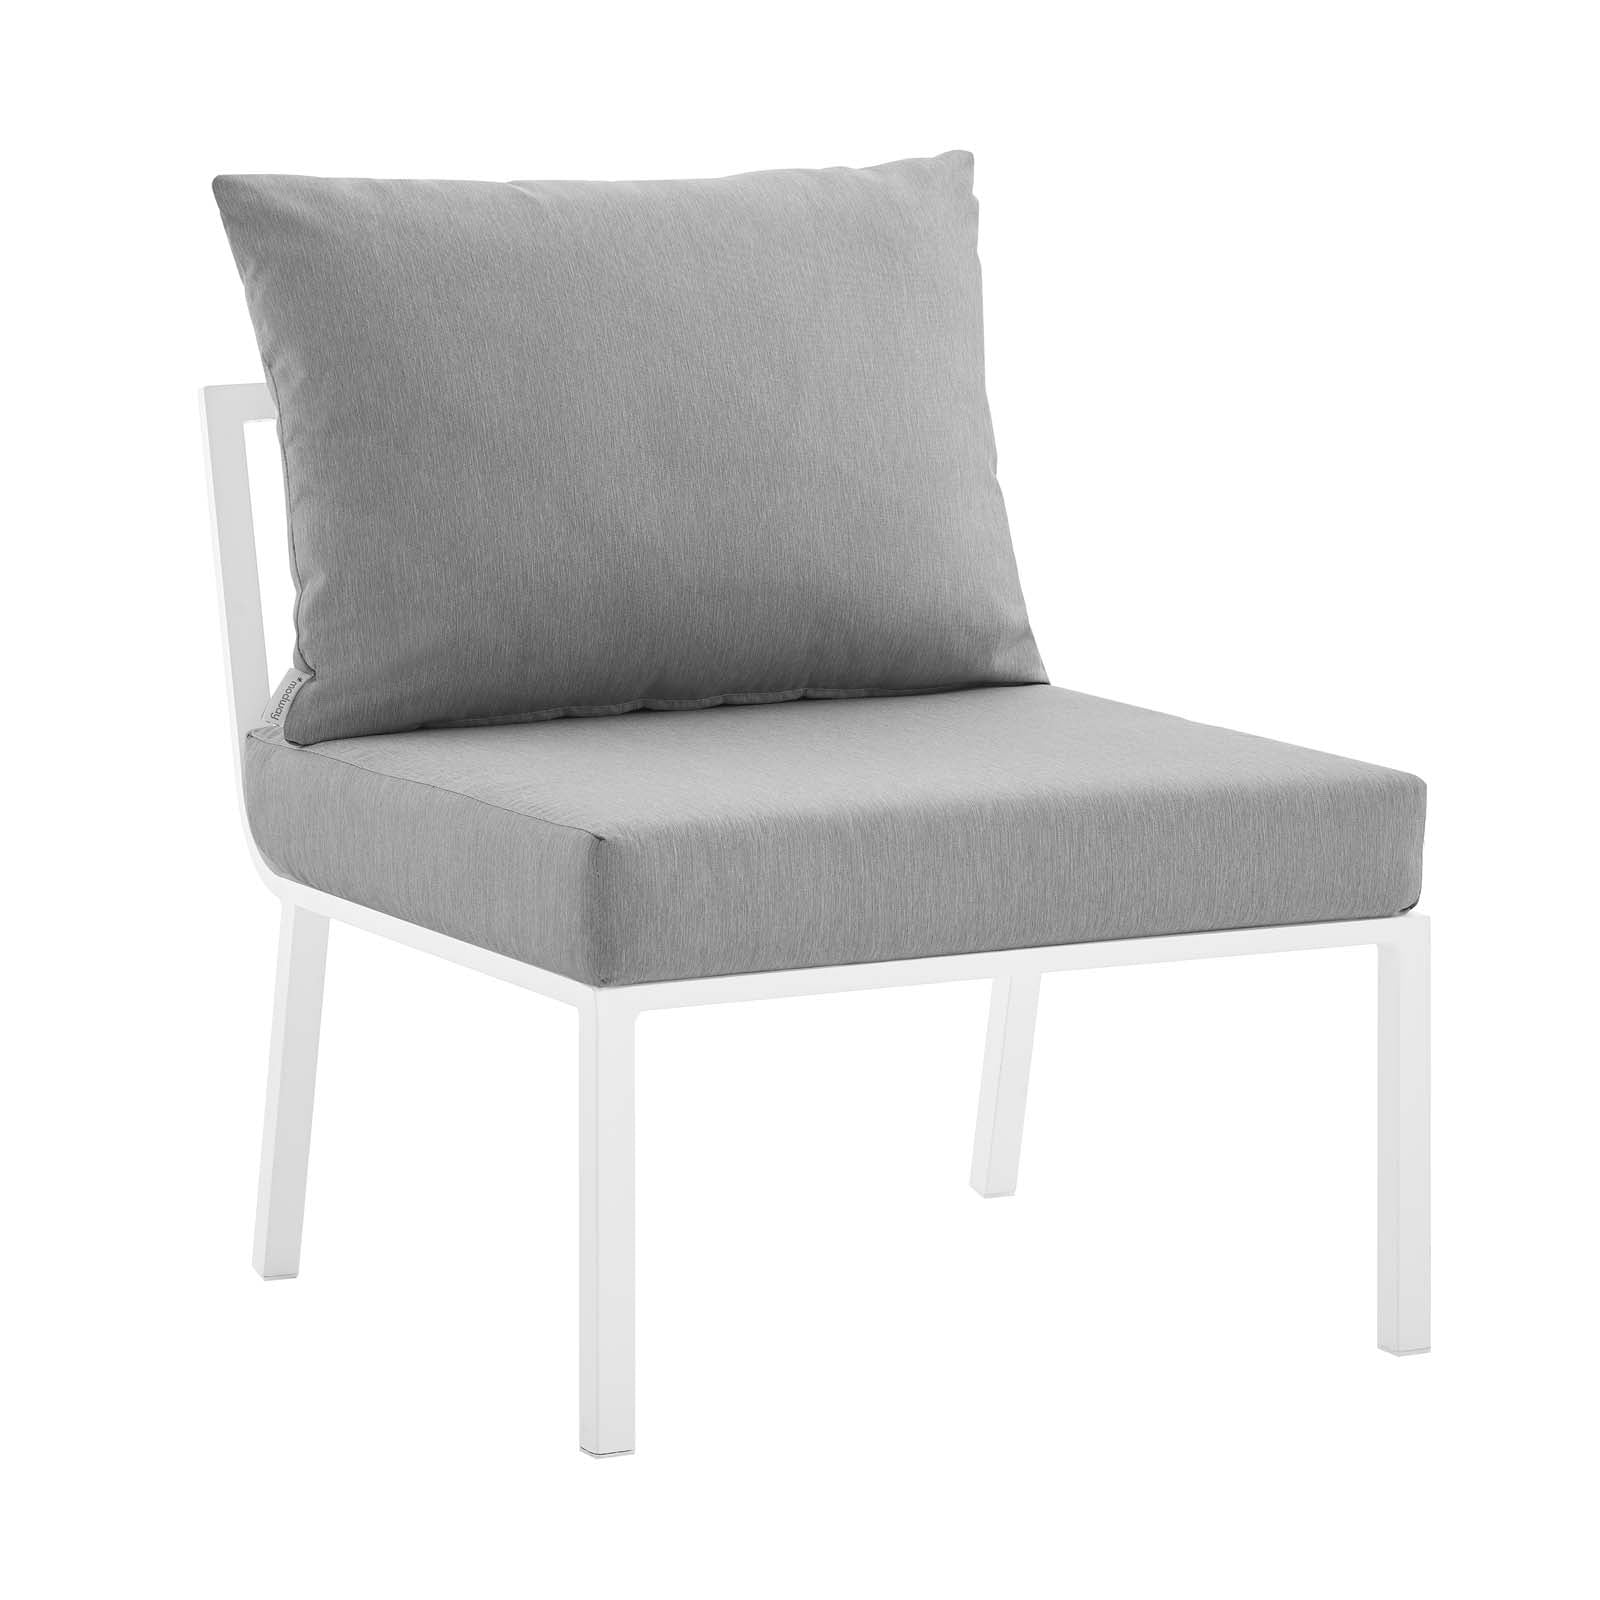 Modway Outdoor Conversation Sets - Riverside 3 Piece Outdoor Patio Aluminum Sectional Sofa Set White Gray